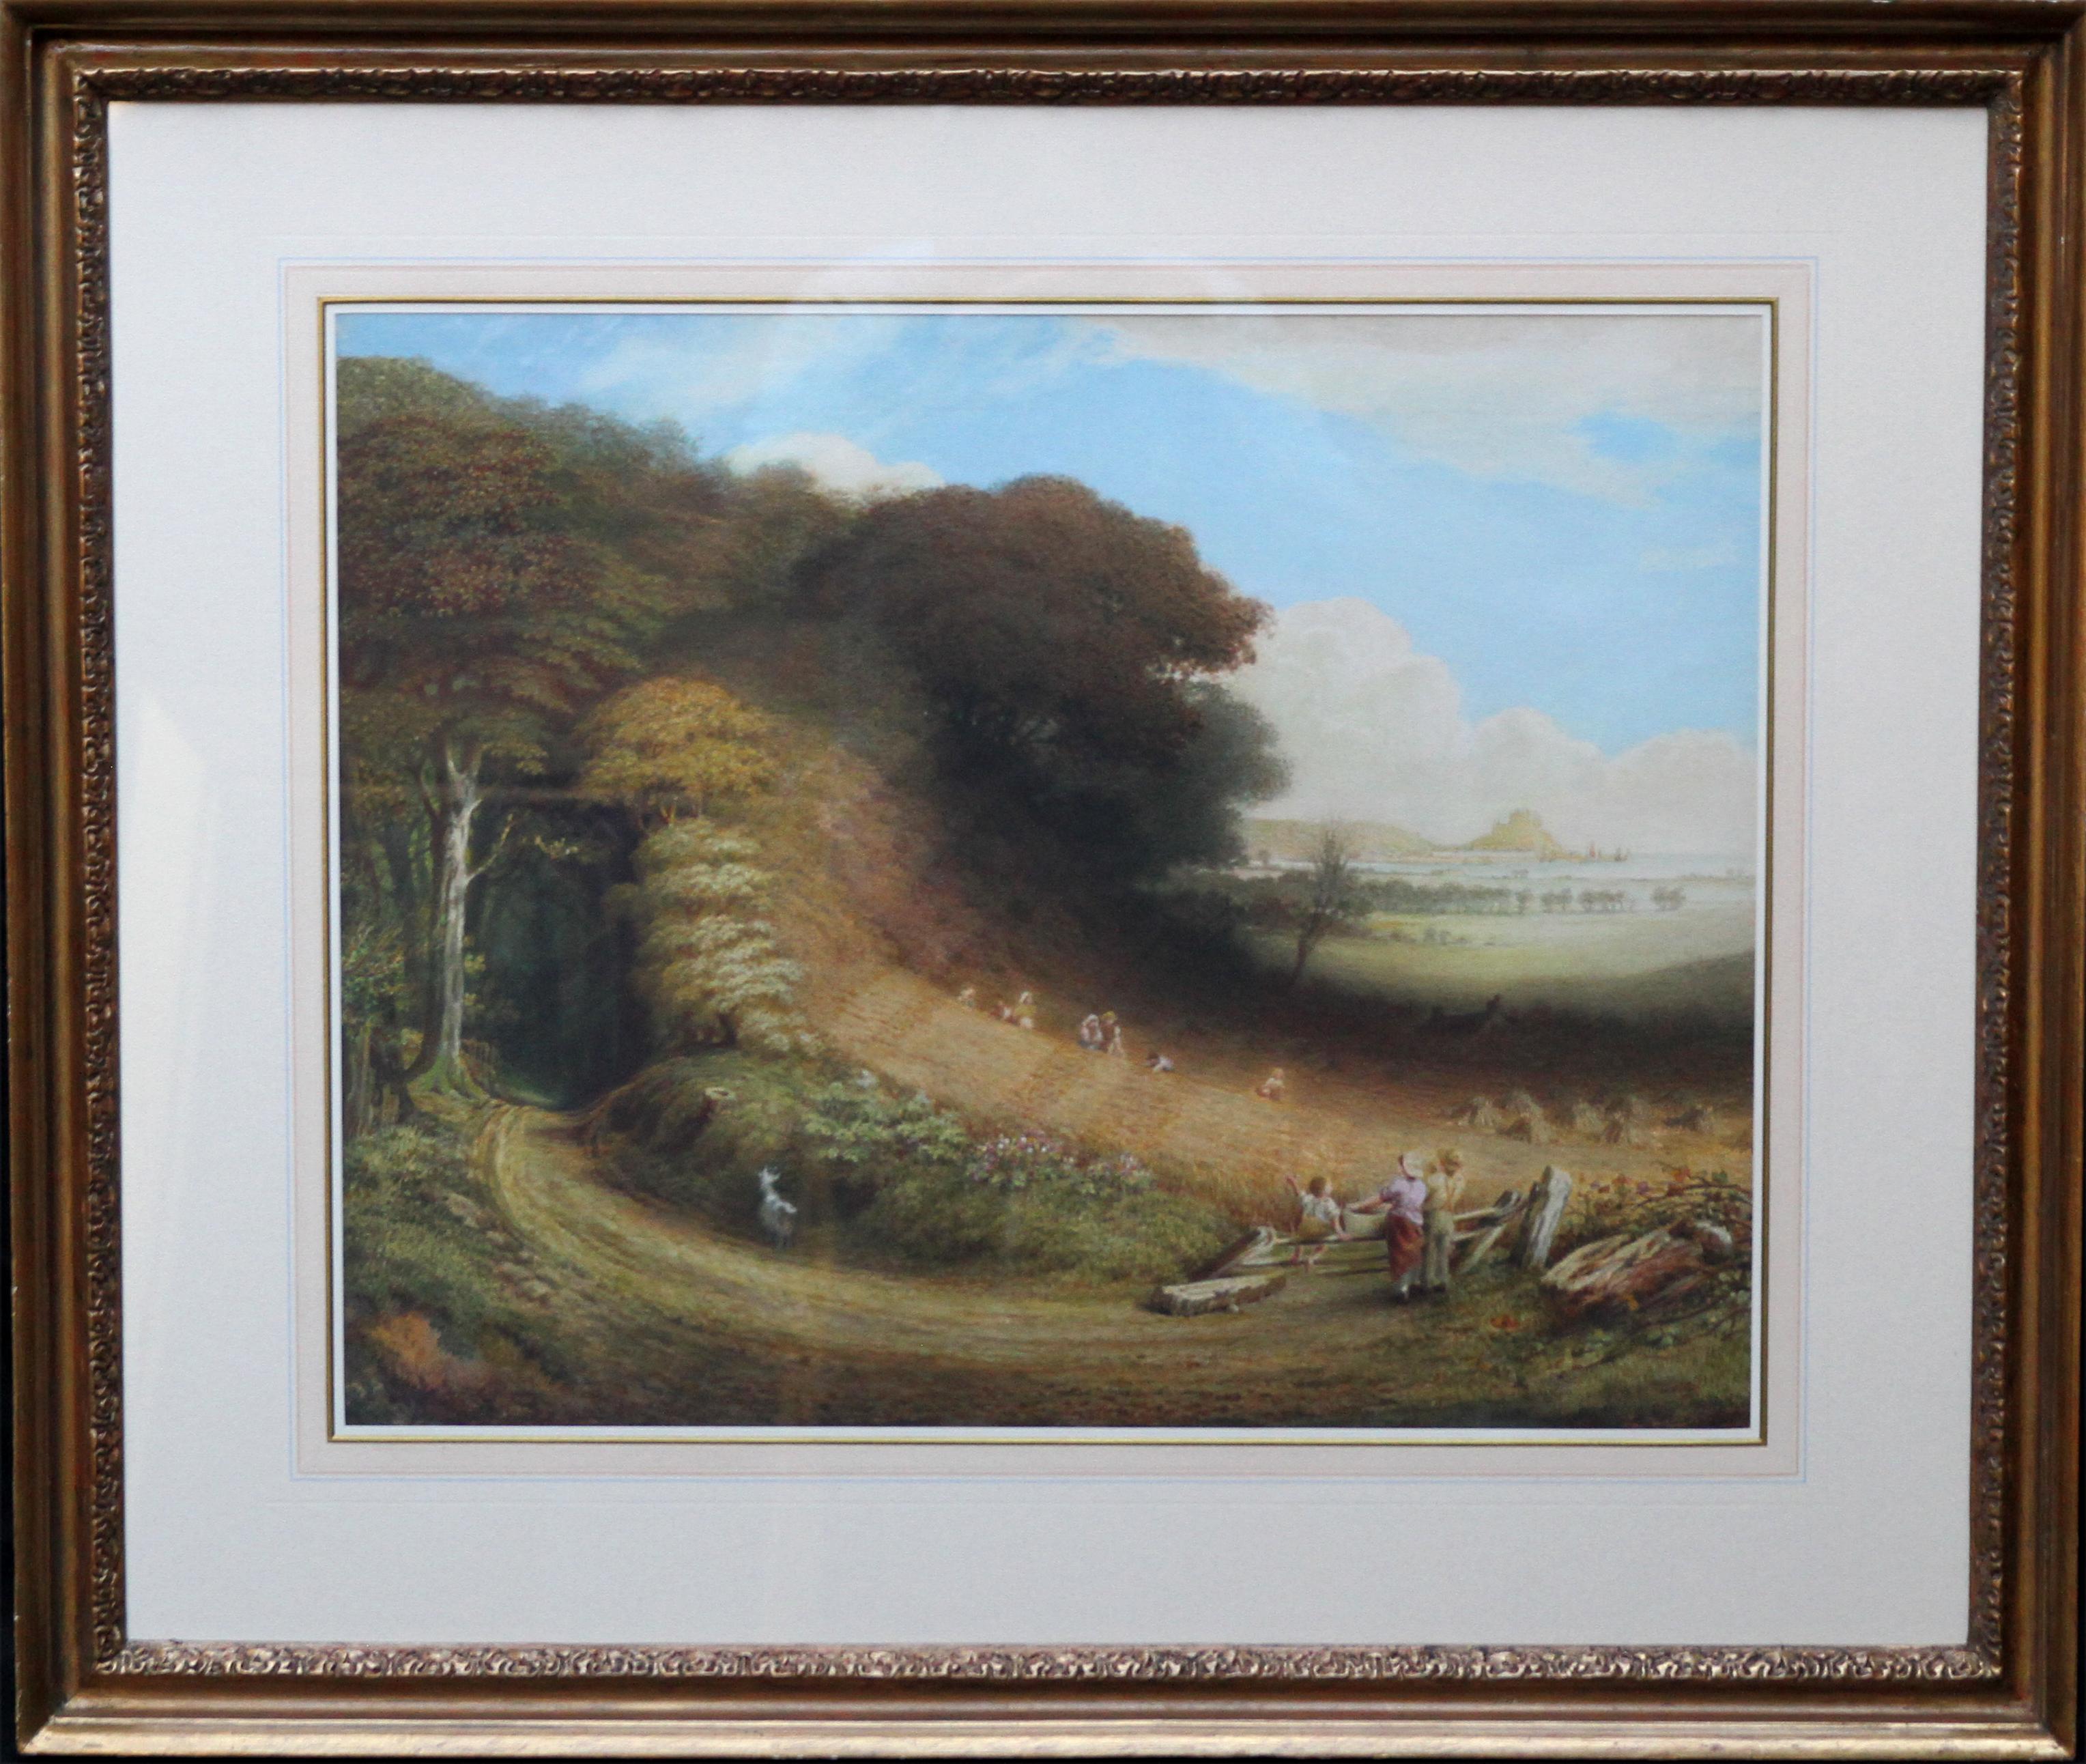 John Linnell (circle) Landscape Art - St. Michael’s Mount - British 19th century art landscape oil painting Cornwall